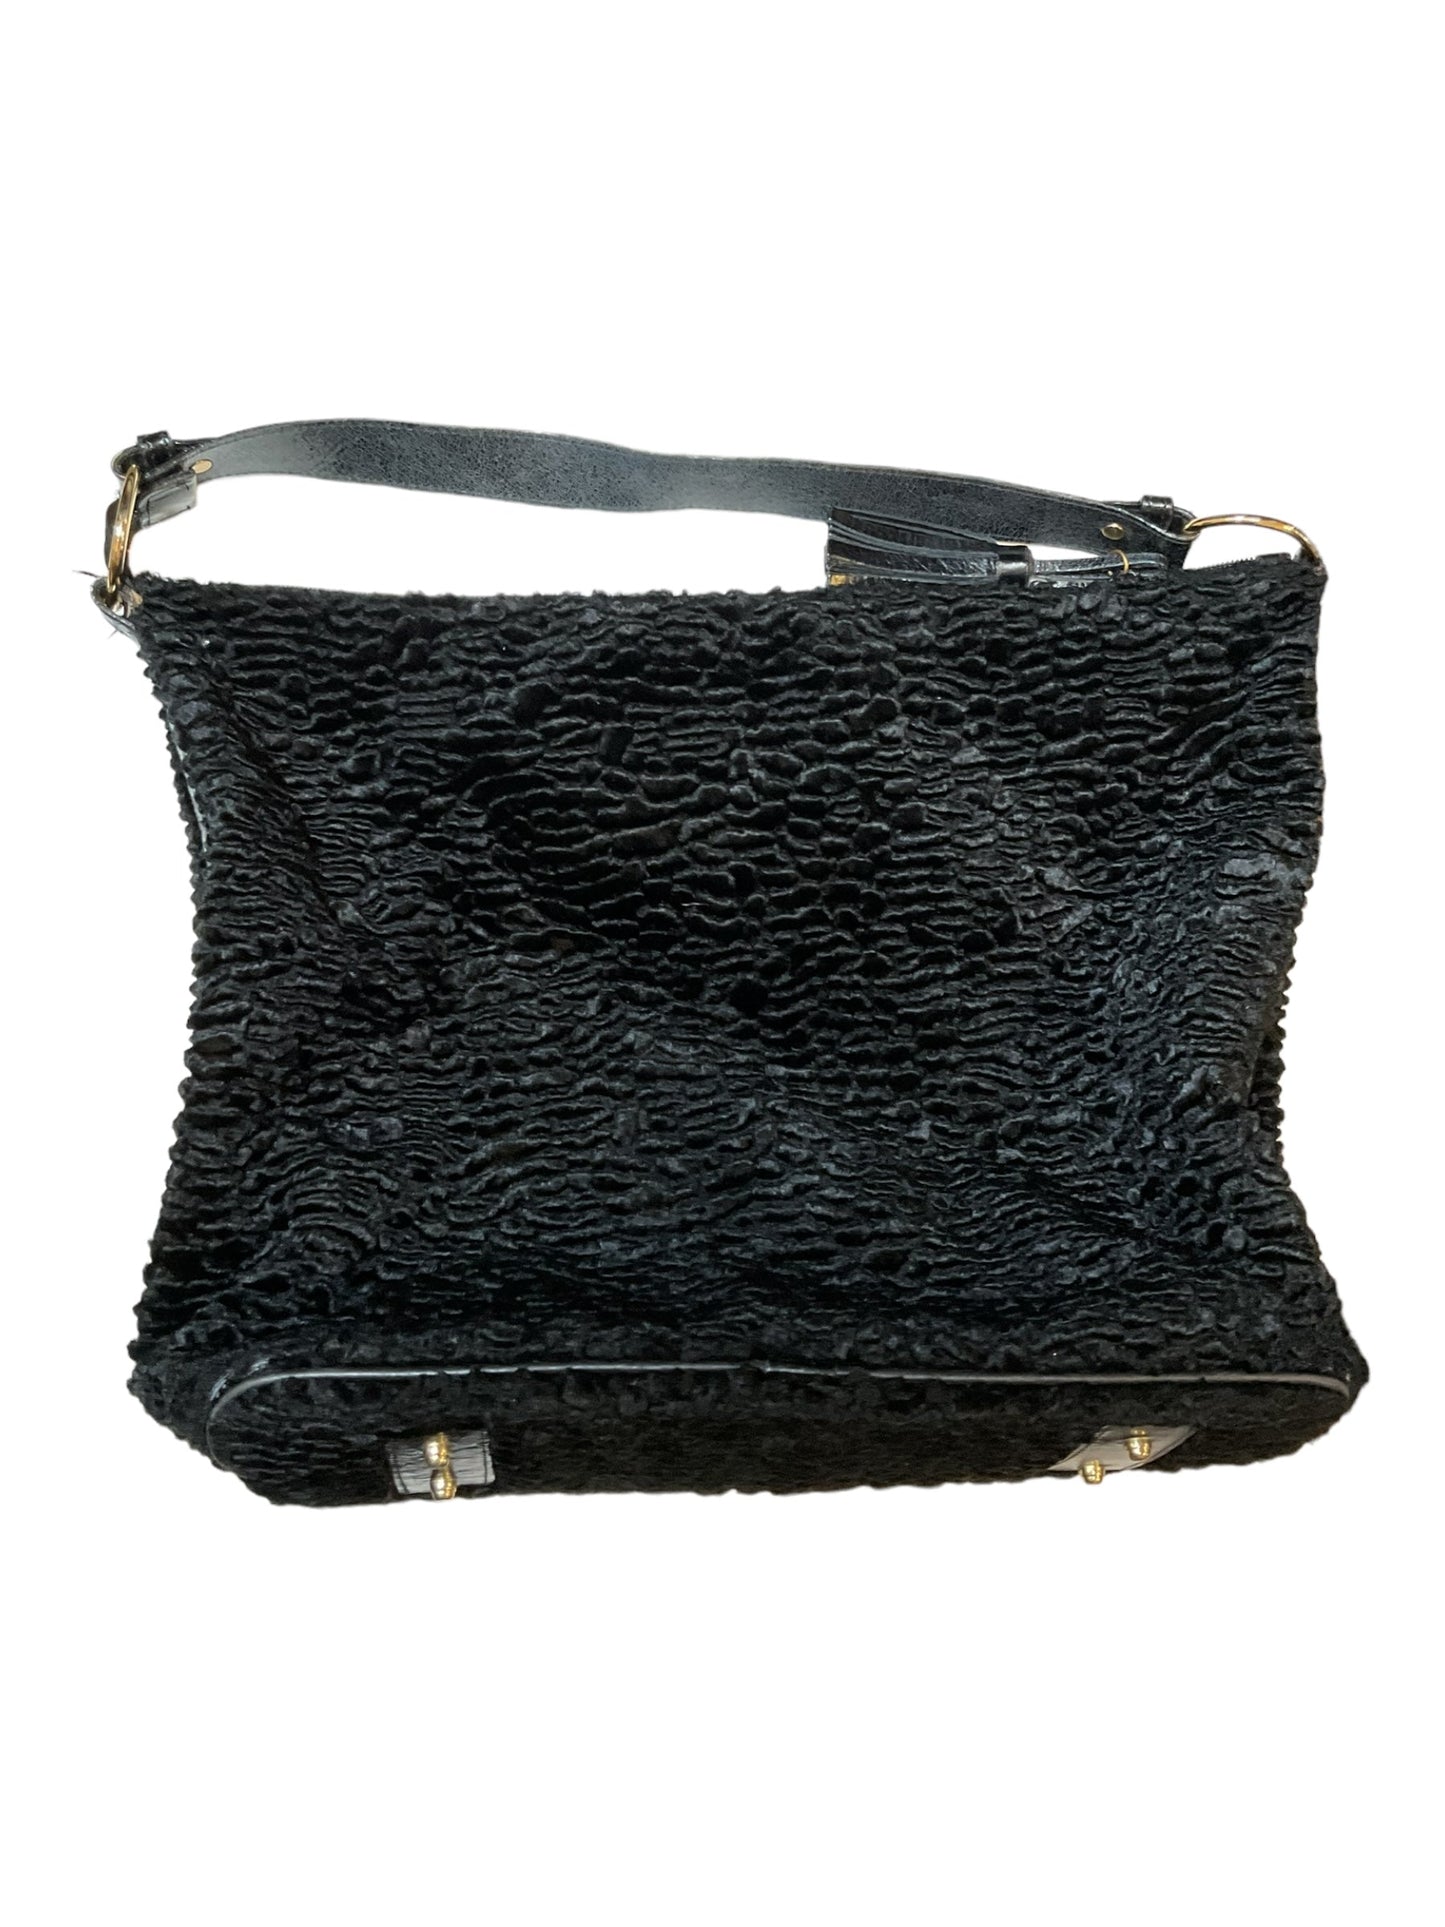 Handbag Designer By Glenda Gies  Size: Large